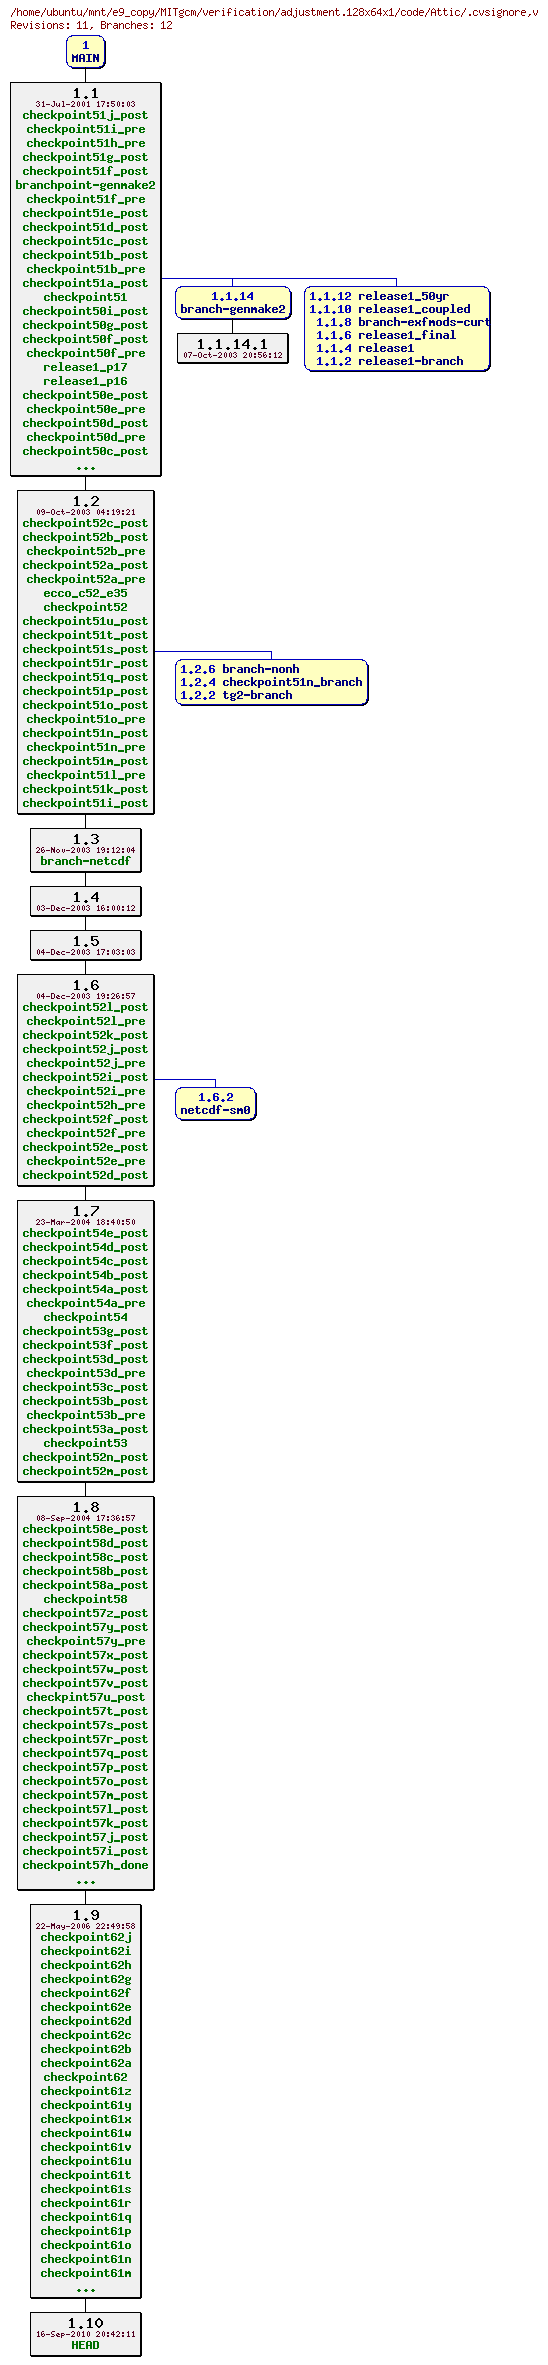 Revisions of MITgcm/verification/adjustment.128x64x1/code/.cvsignore